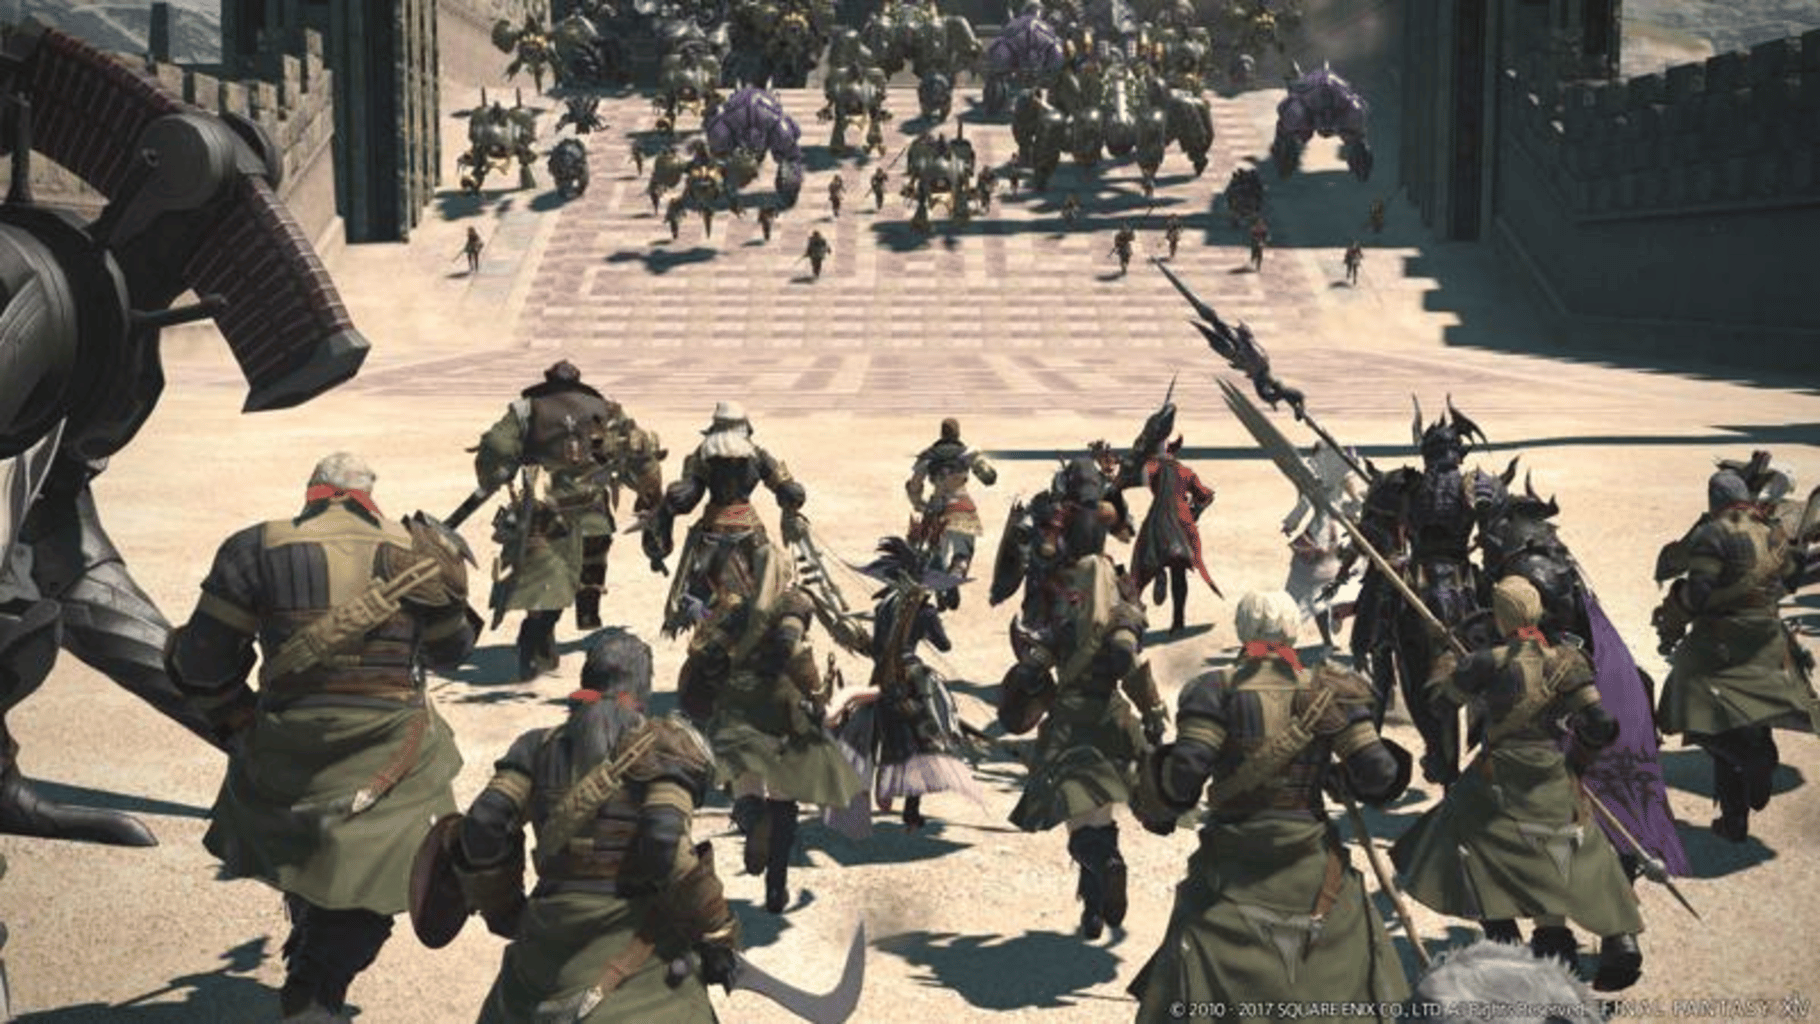 Final Fantasy XIV: Complete Edition screenshot